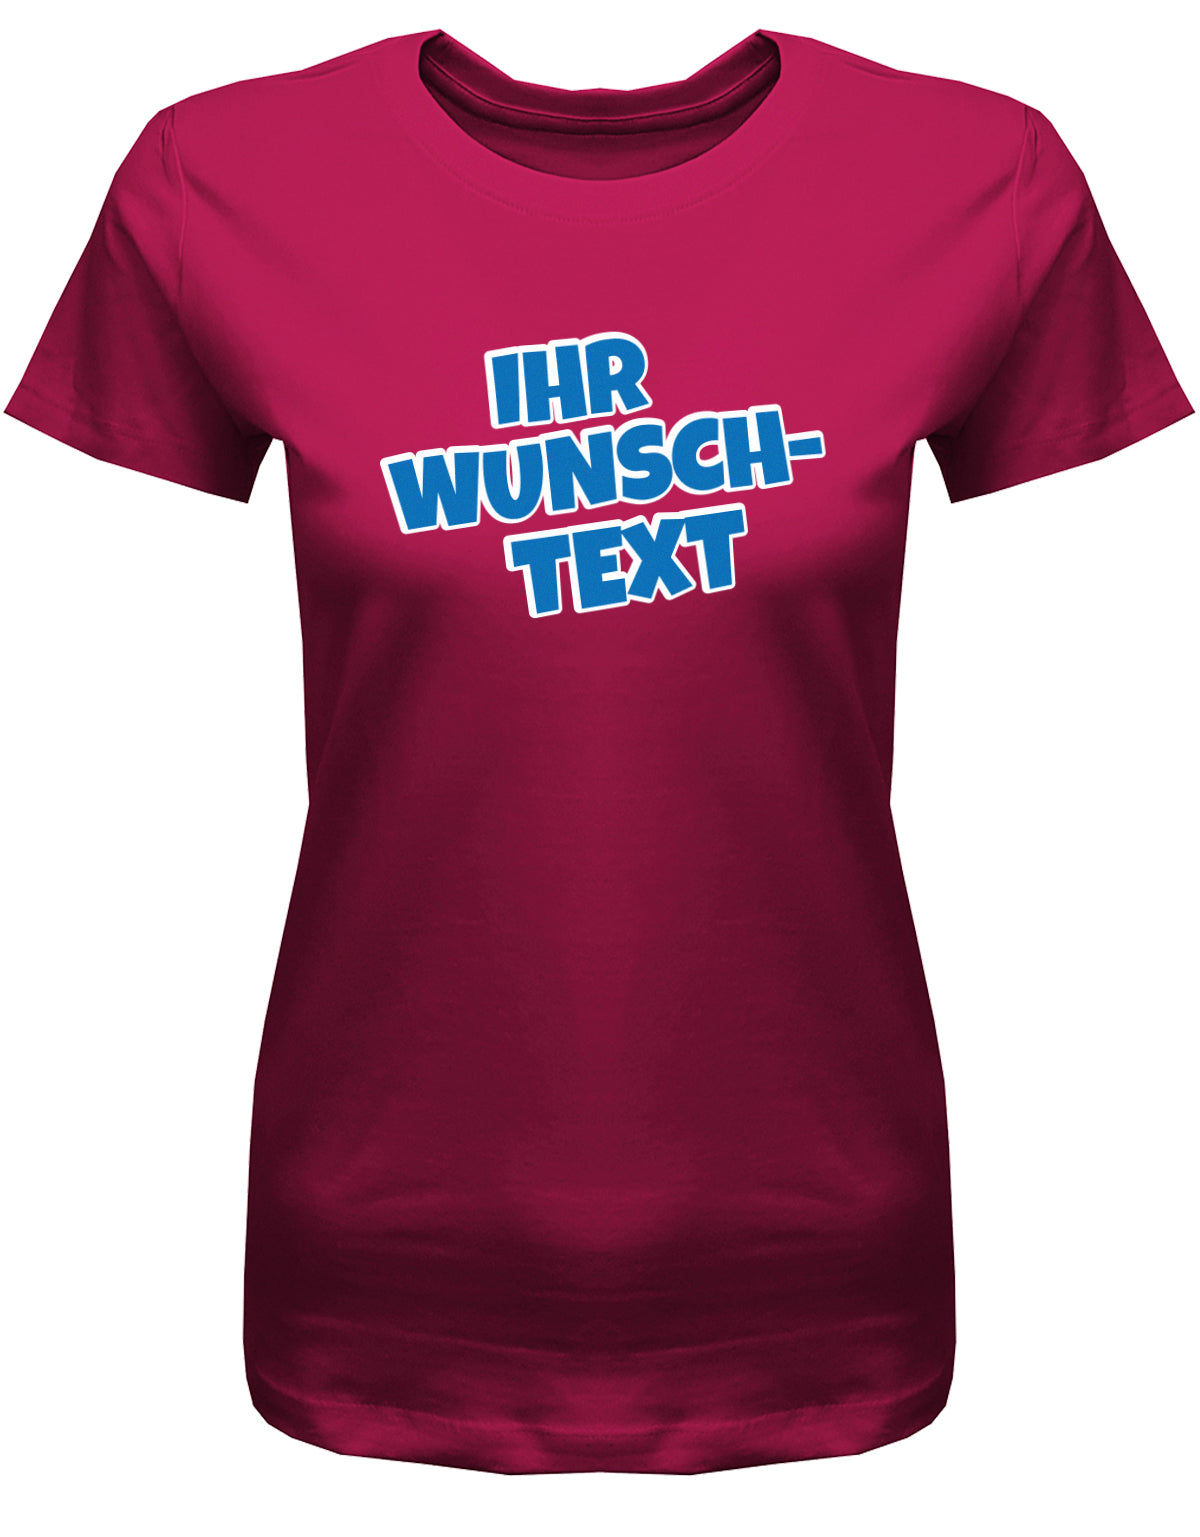 Frauen Tshirt mit Wunschtext.  Comic Schriftart mit weißer Umrandung. Sorbet